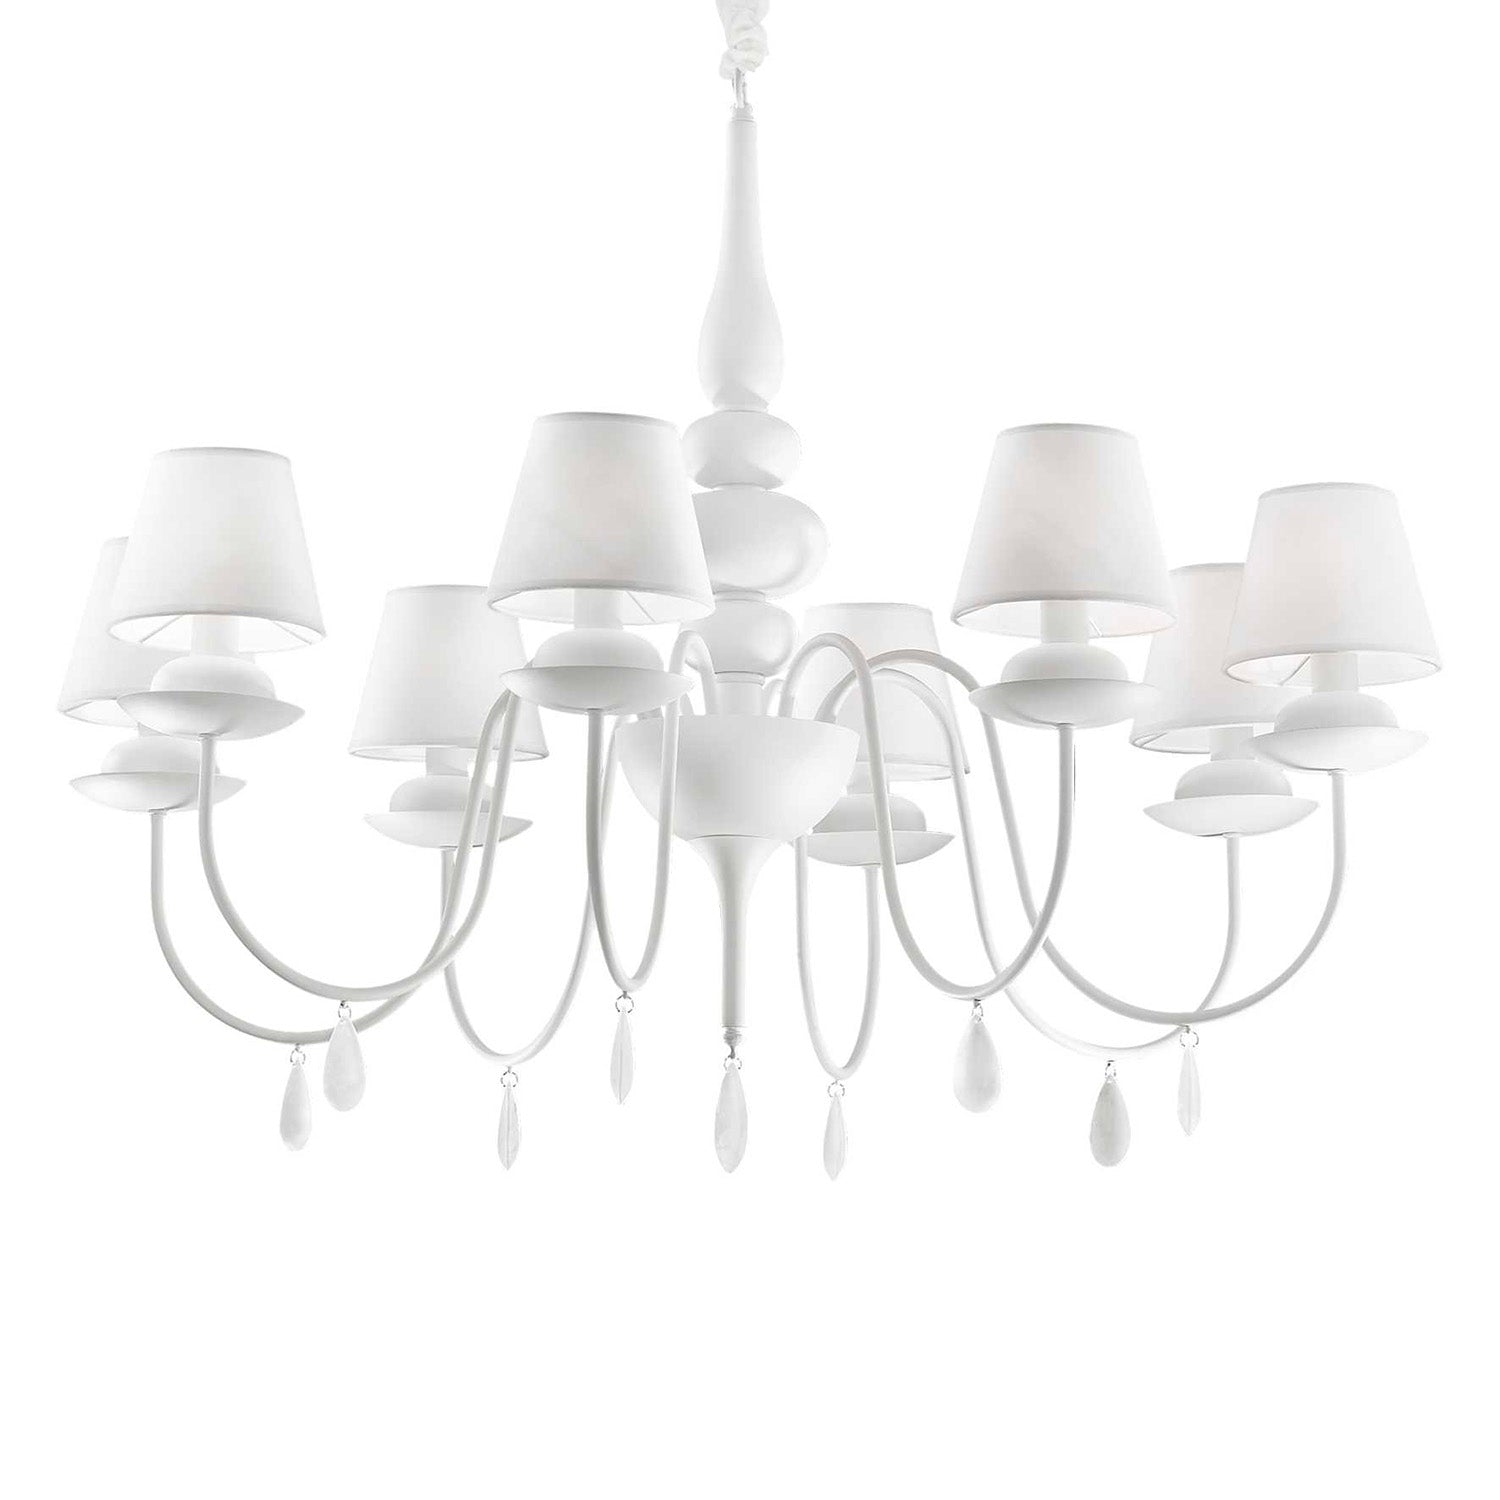 WHITE - Chandelier chandelier with white or black tassels